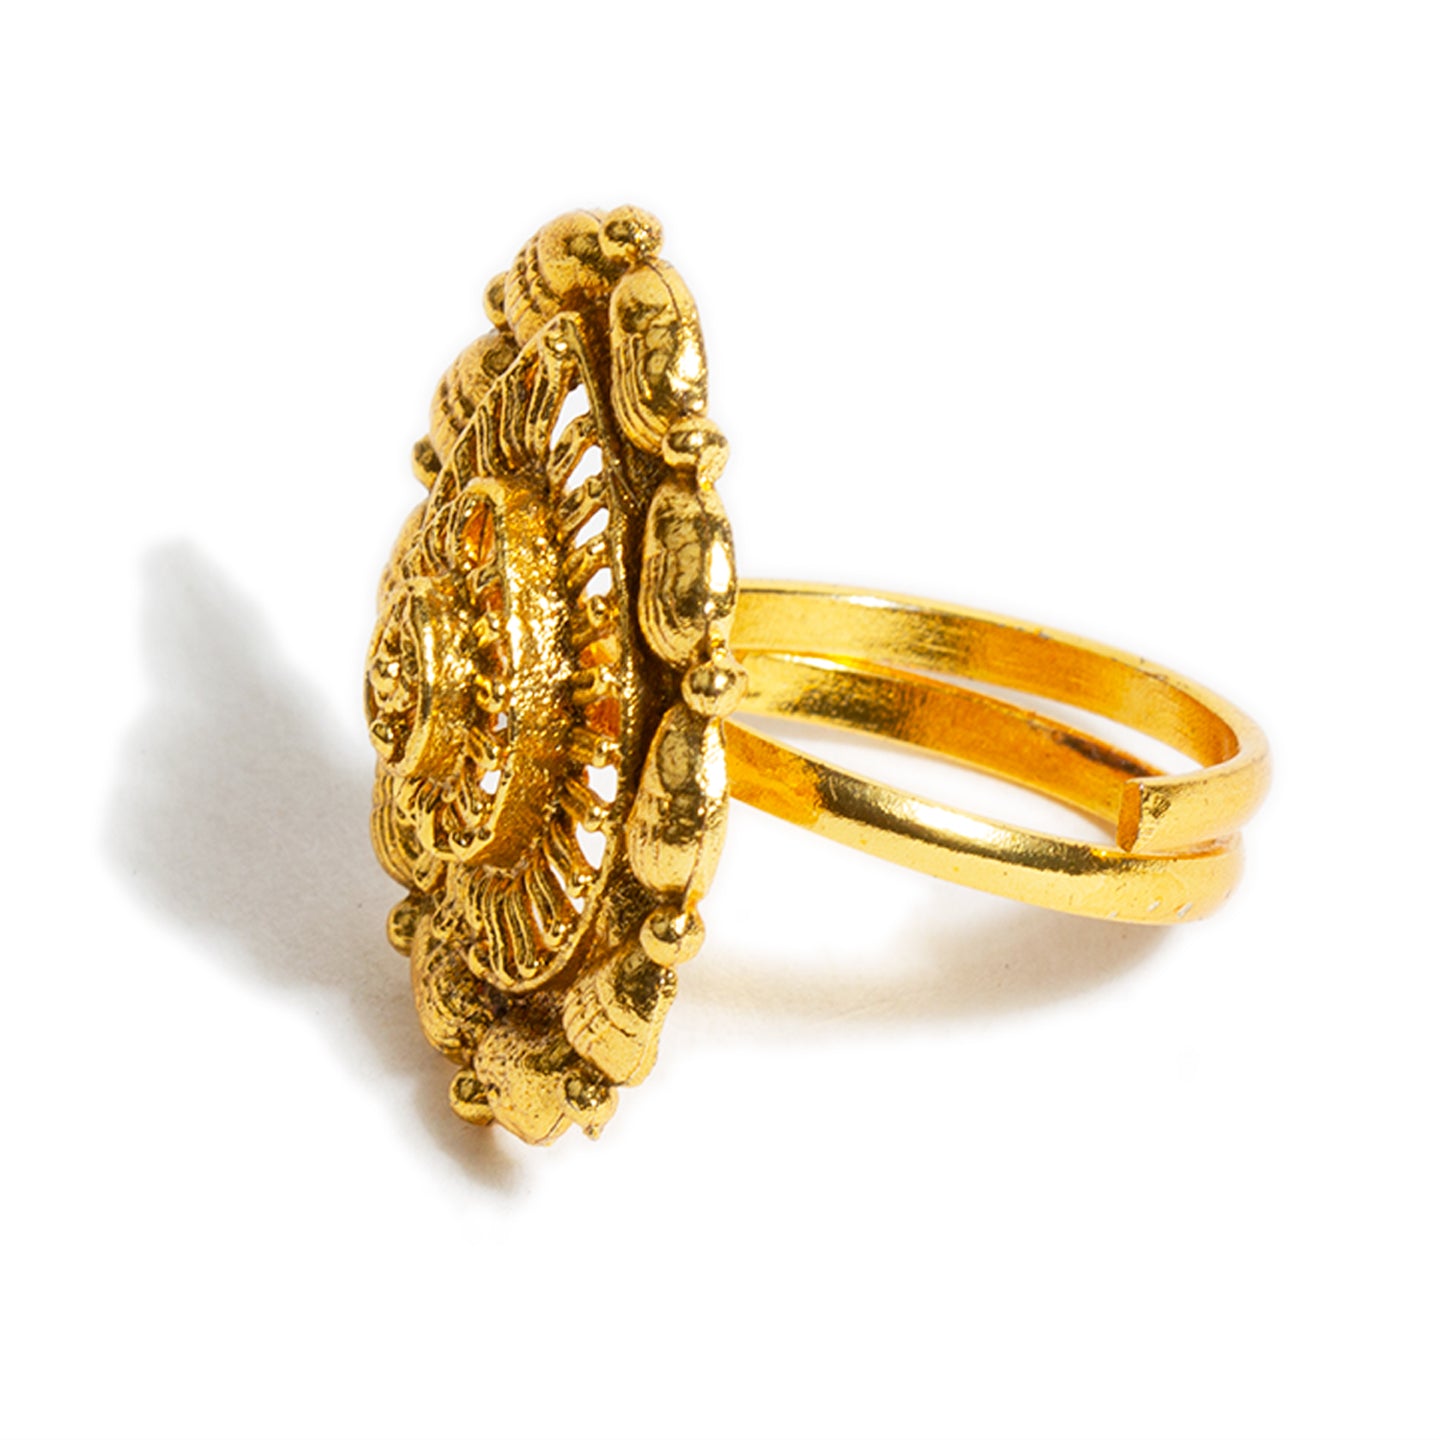 New Model Simple Gold Rings Designs| Alibaba.com